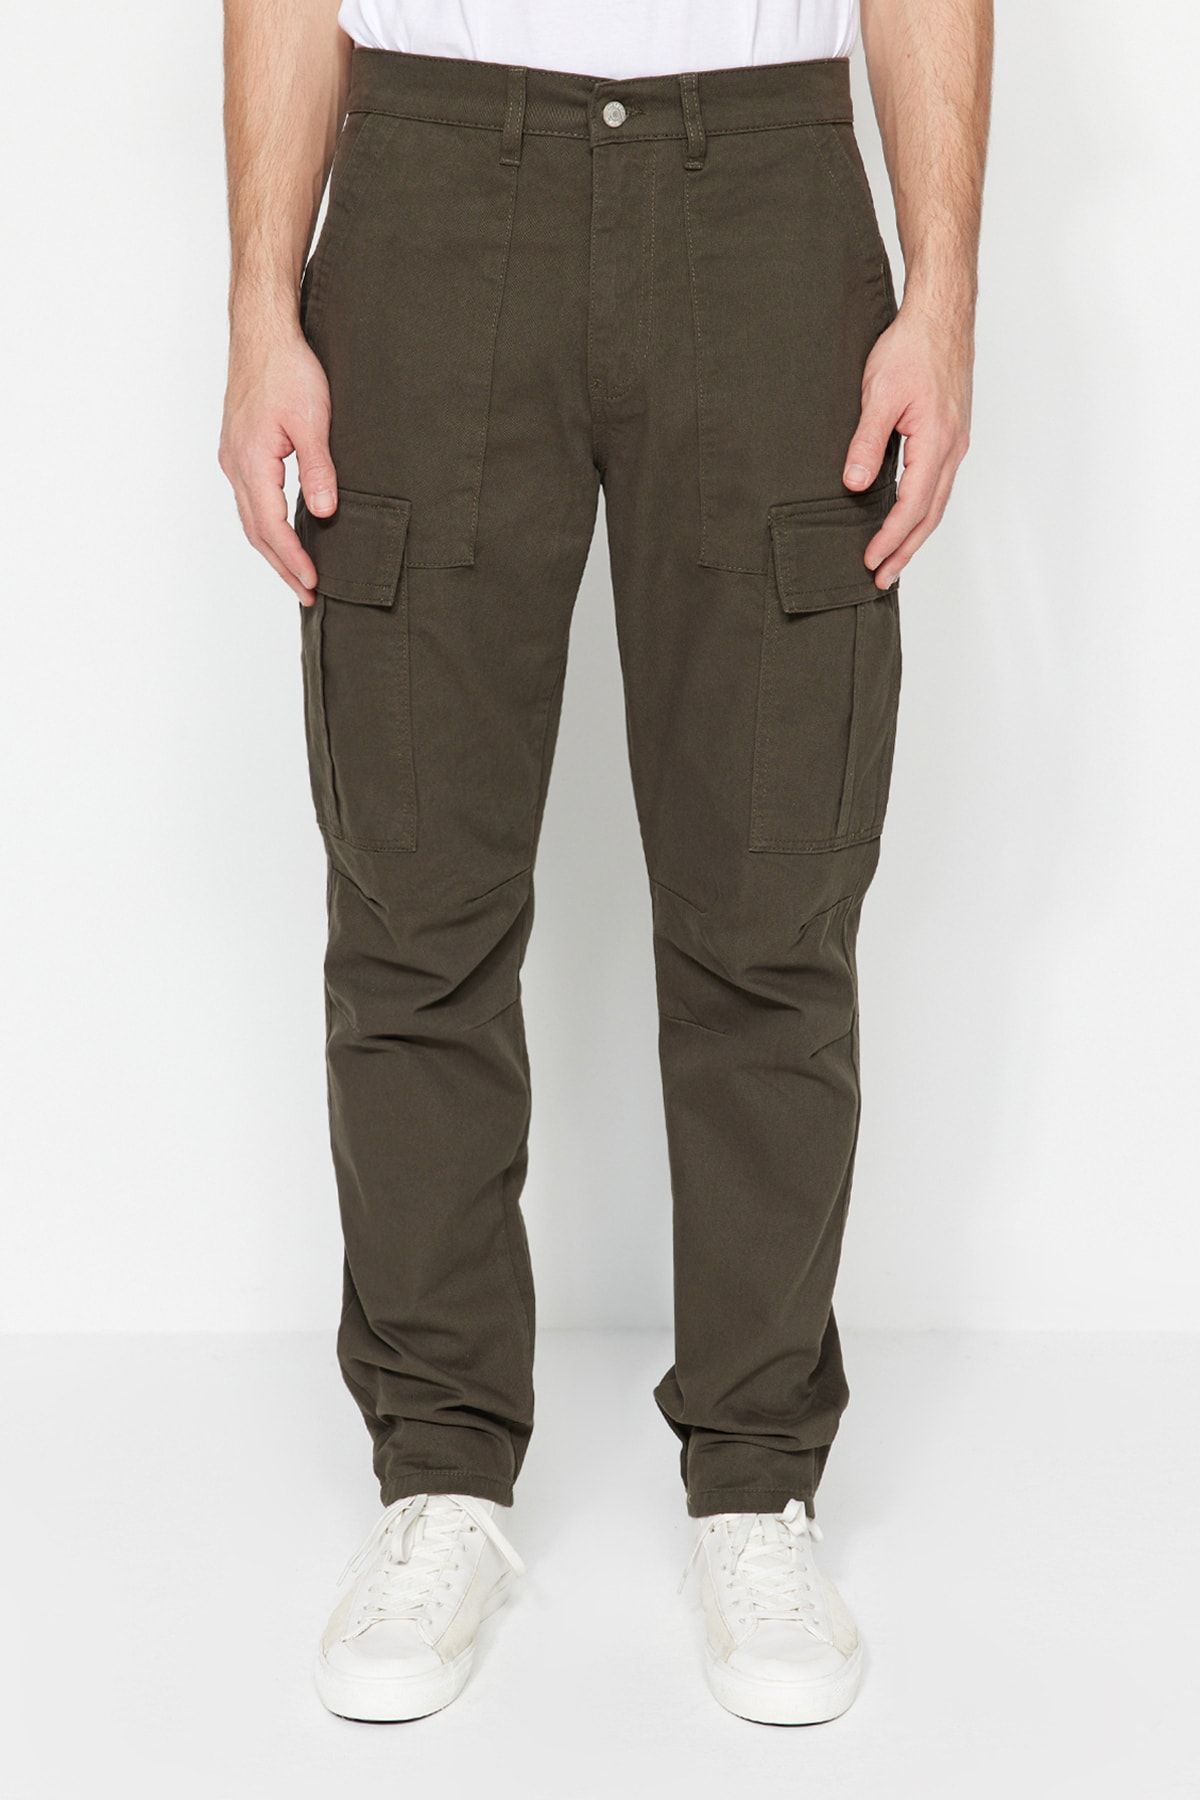 Trendyol Collection Pants - Brown - Carrot pants - Trendyol